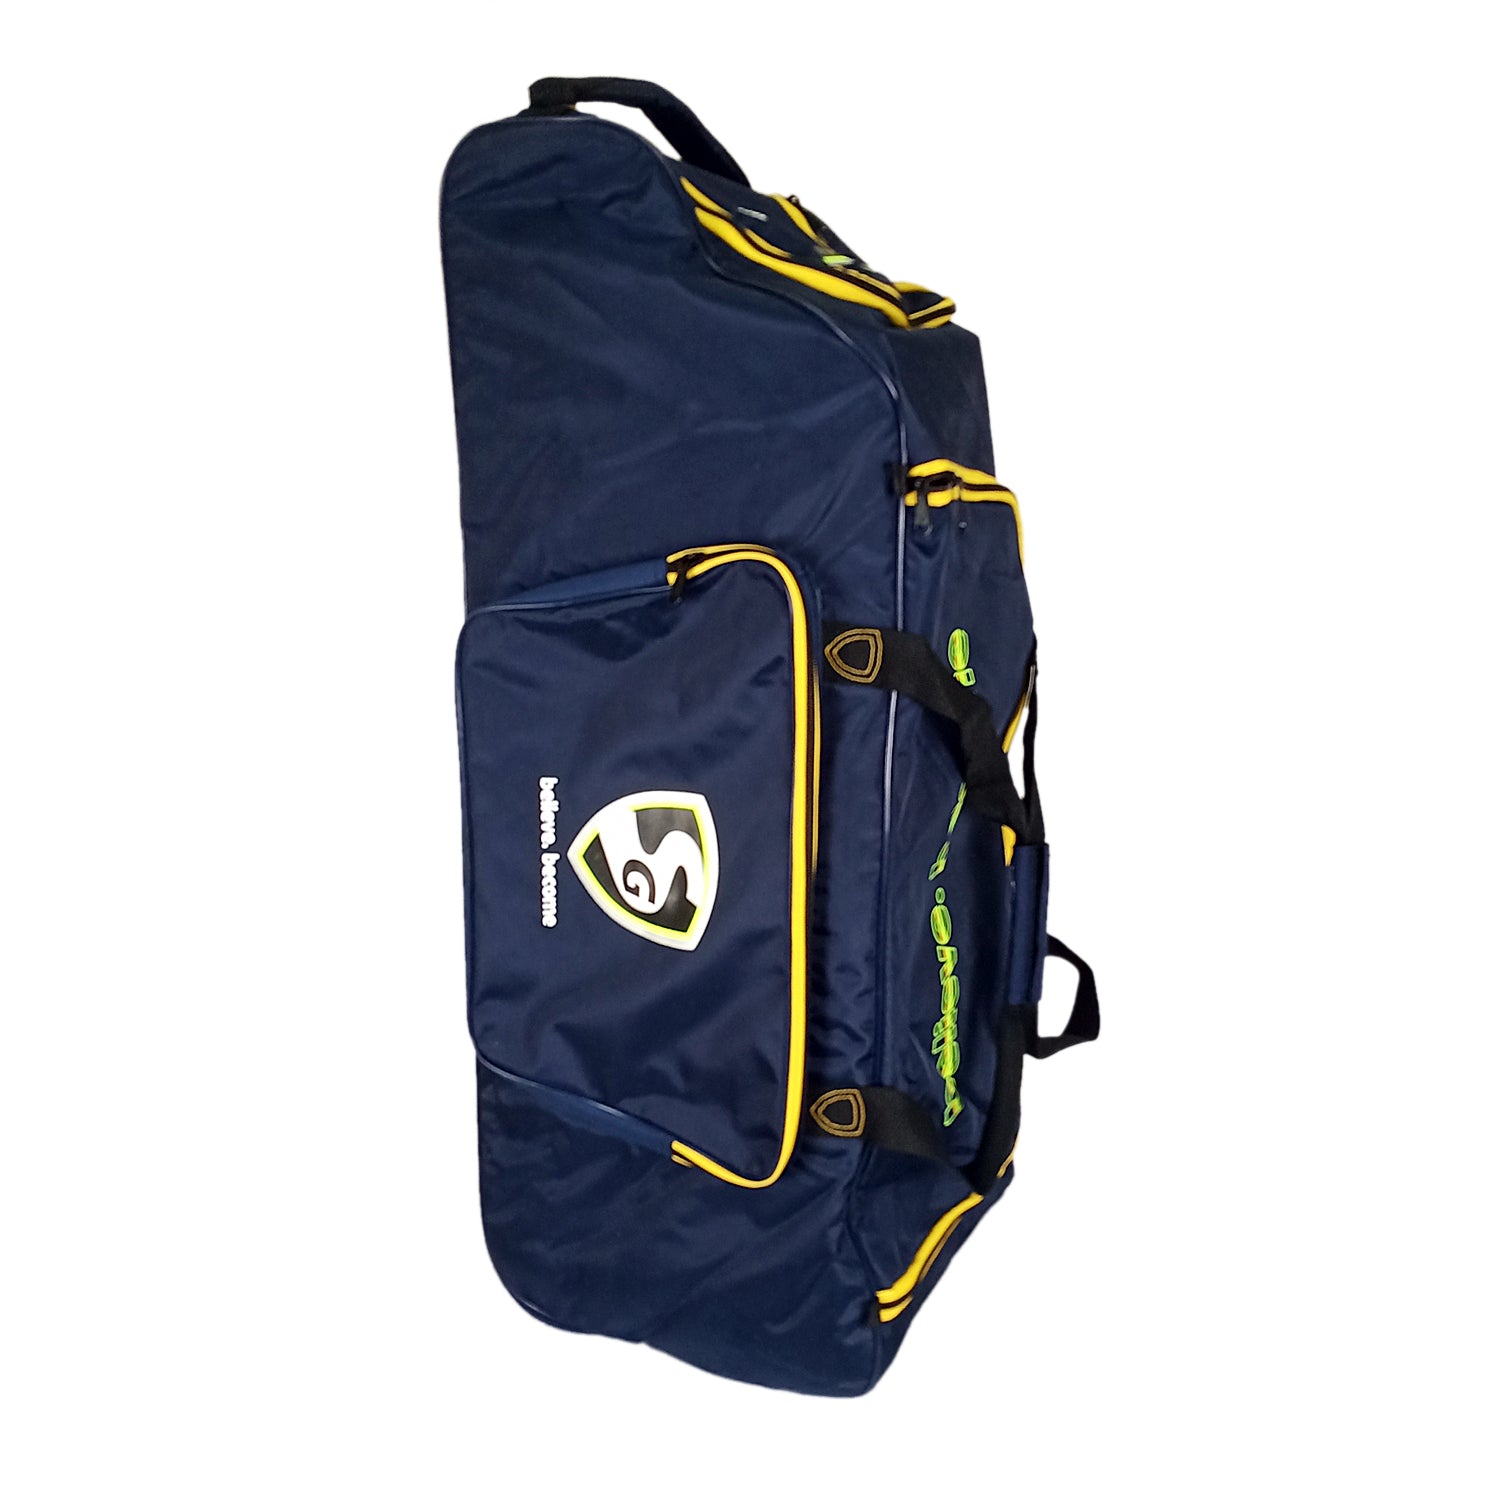 SG Smartpak 1.0 Wheelie Cricket Kit Bag - Best Price online Prokicksports.com